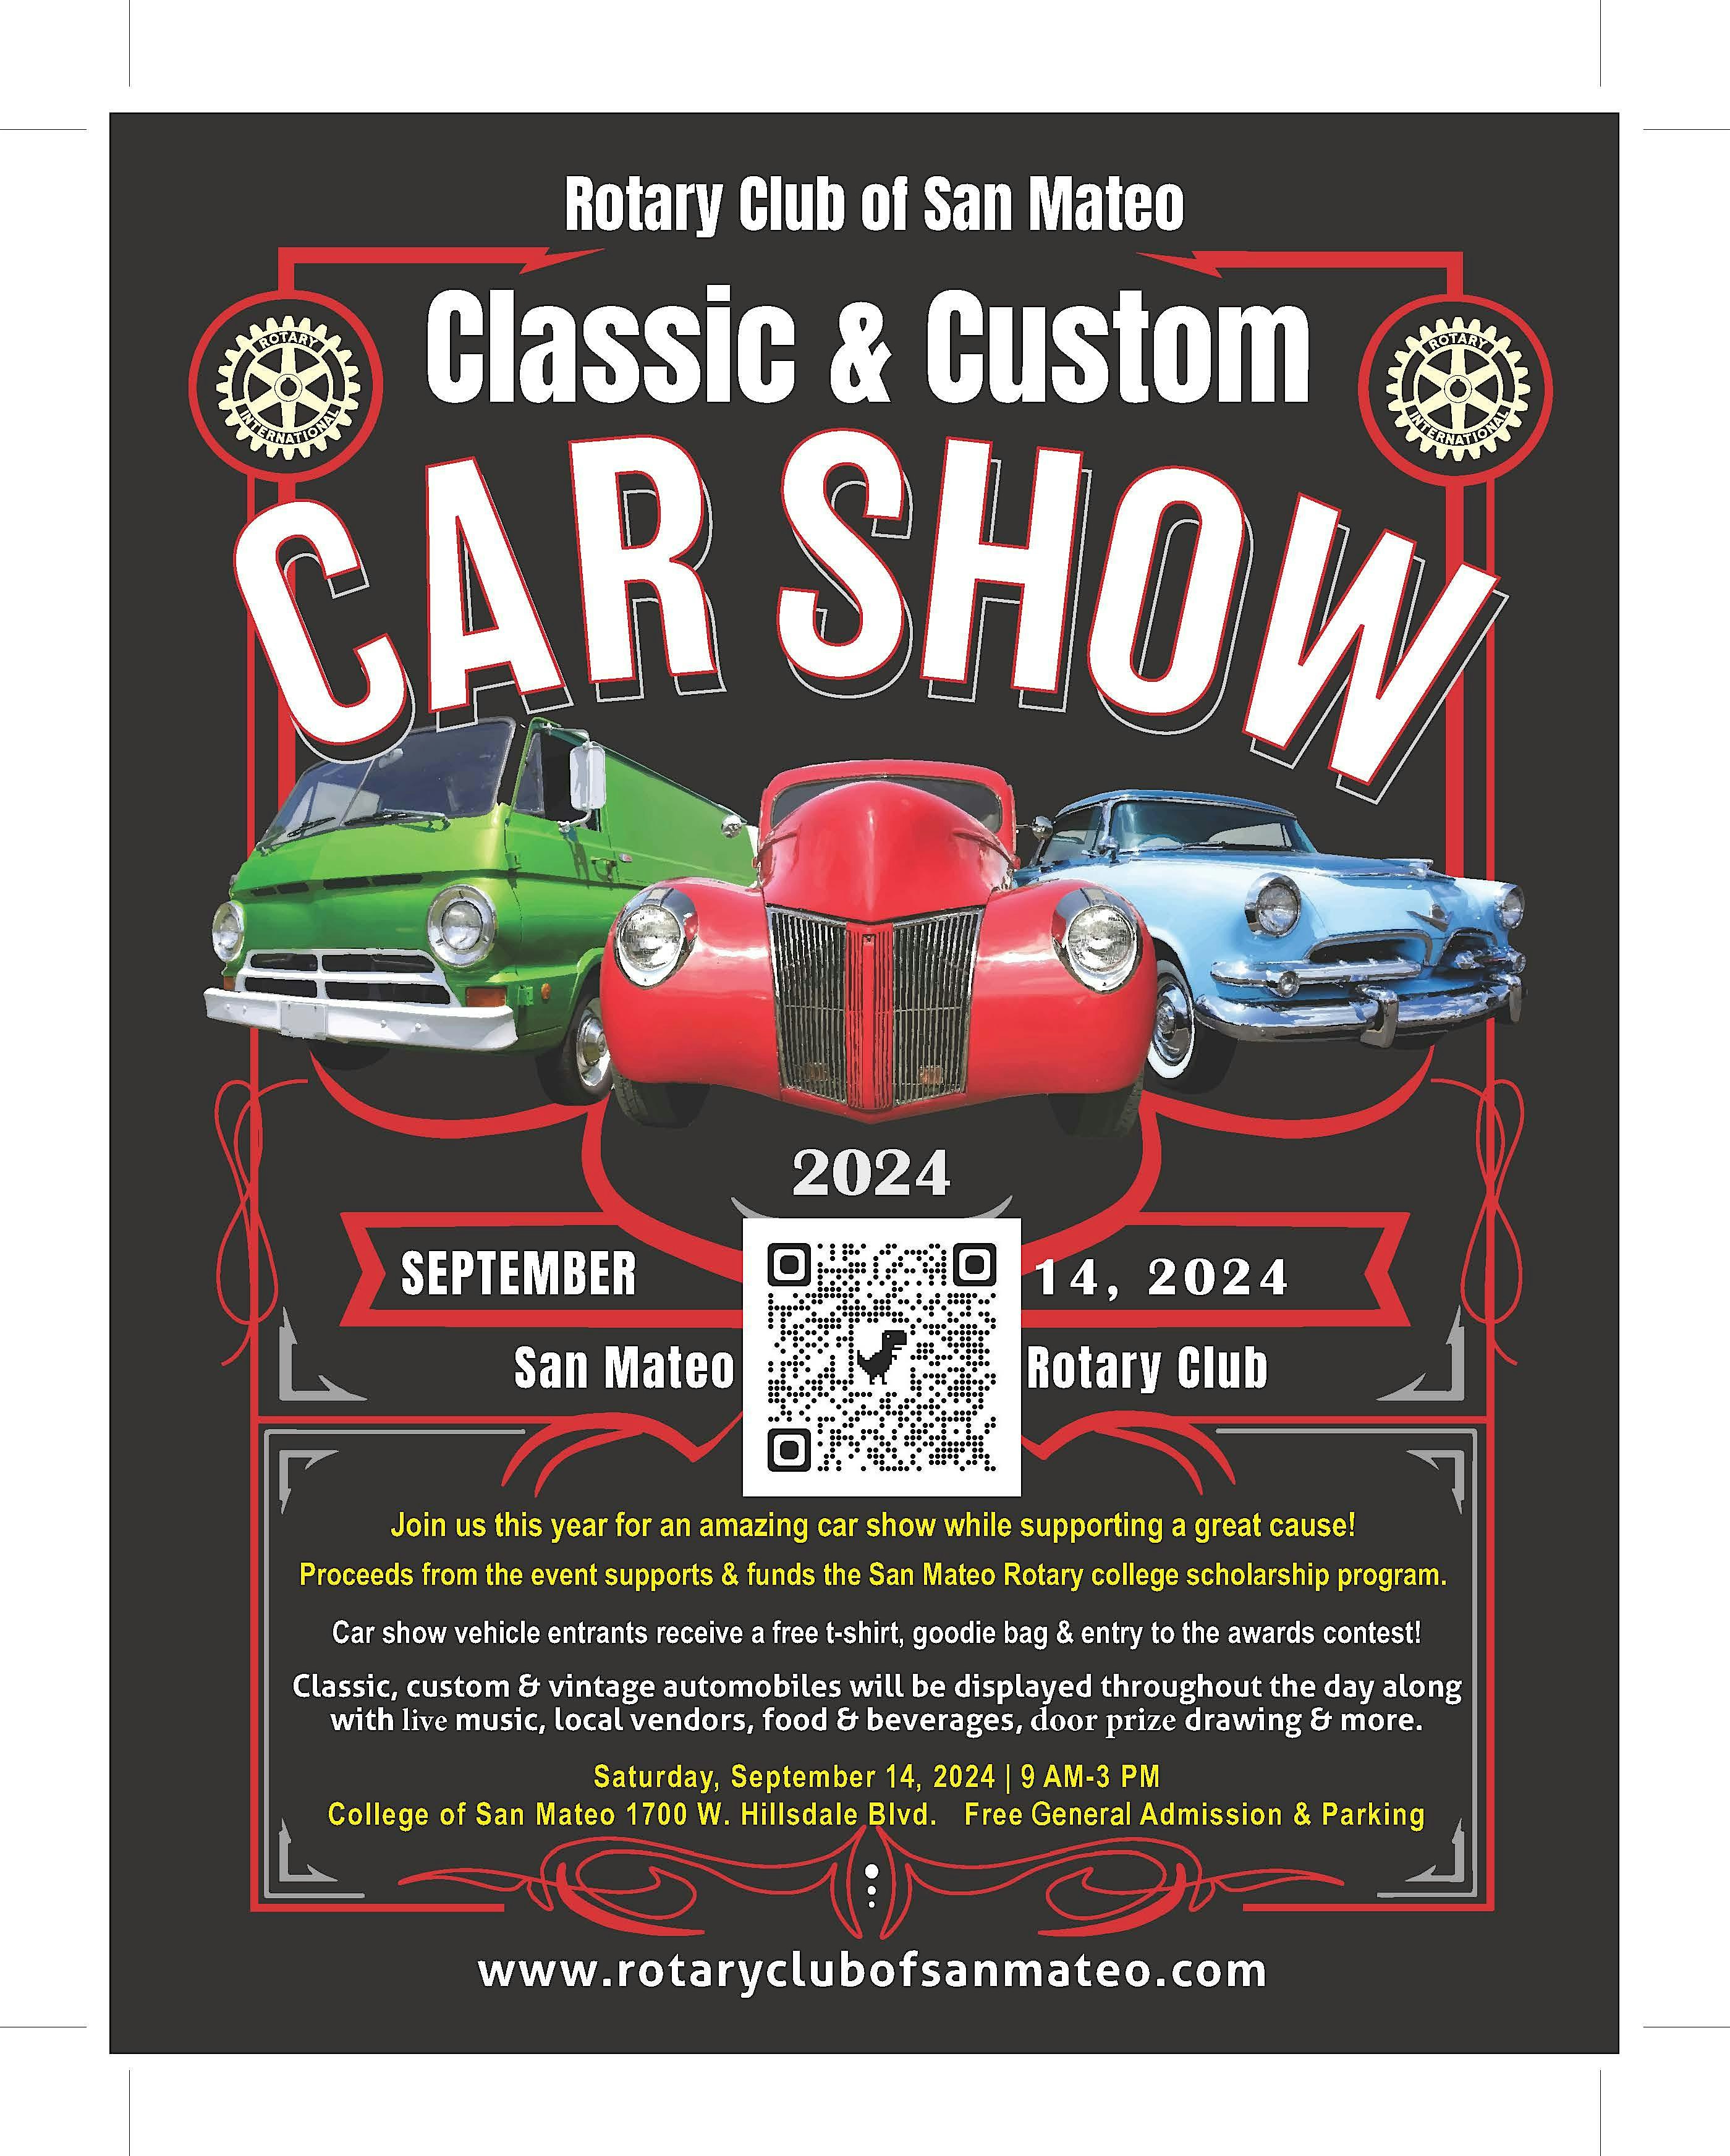 Classic and Custom Car Show